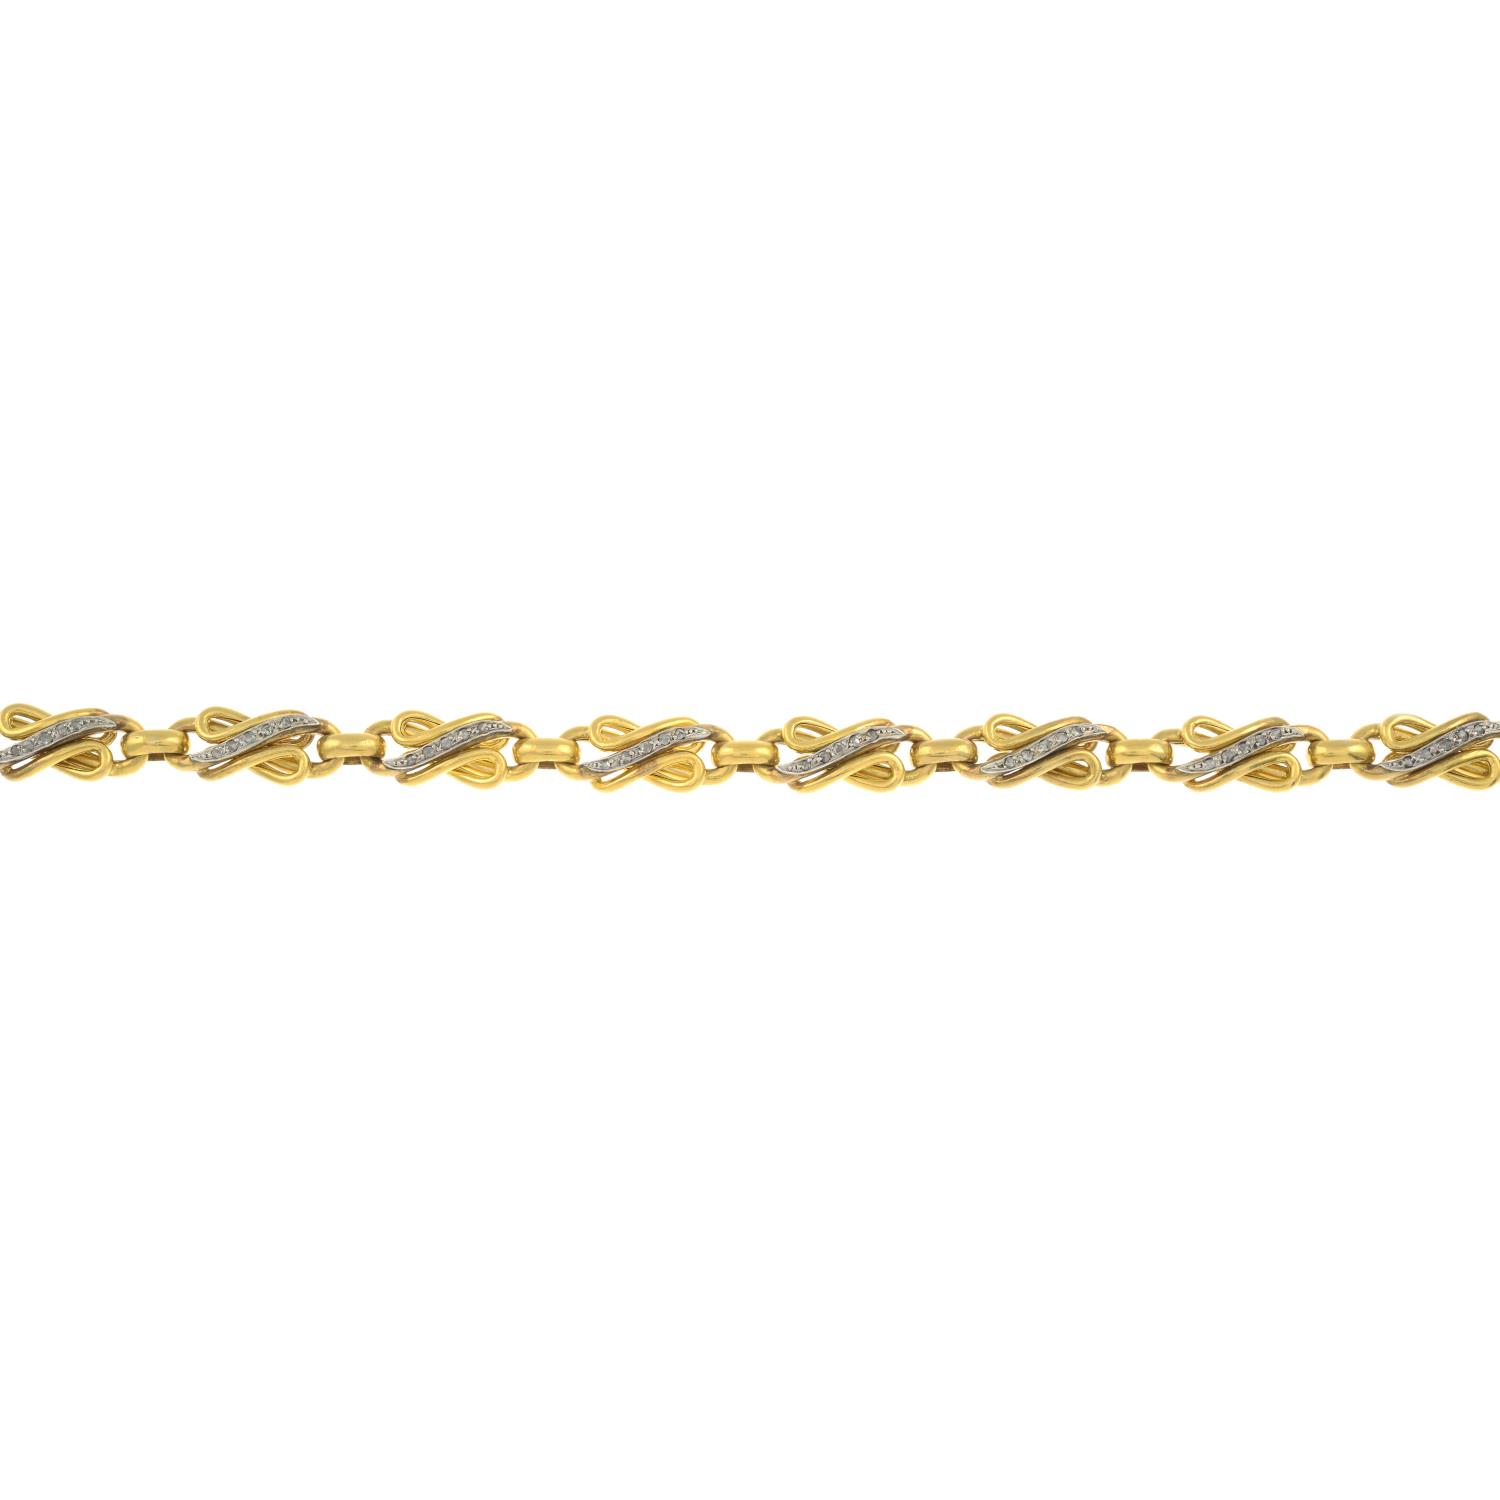 An Art Nouveau 18ct gold rose-cut diamond bracelet.French assay marks.Length 18cms.